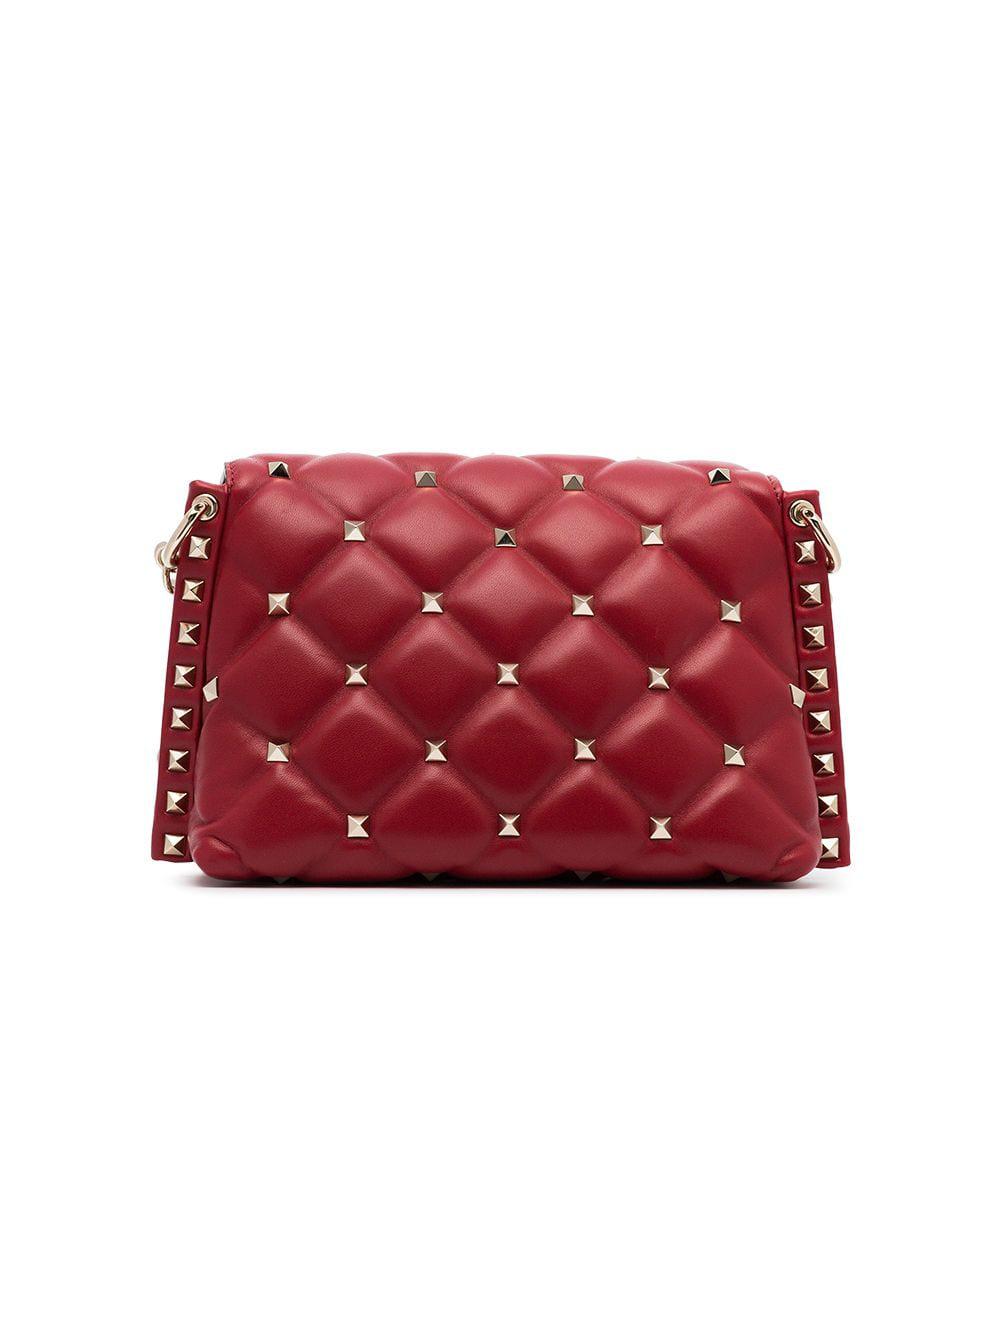 Valentino Leather Valentino Garavani Candystud Crossbody Bag in 